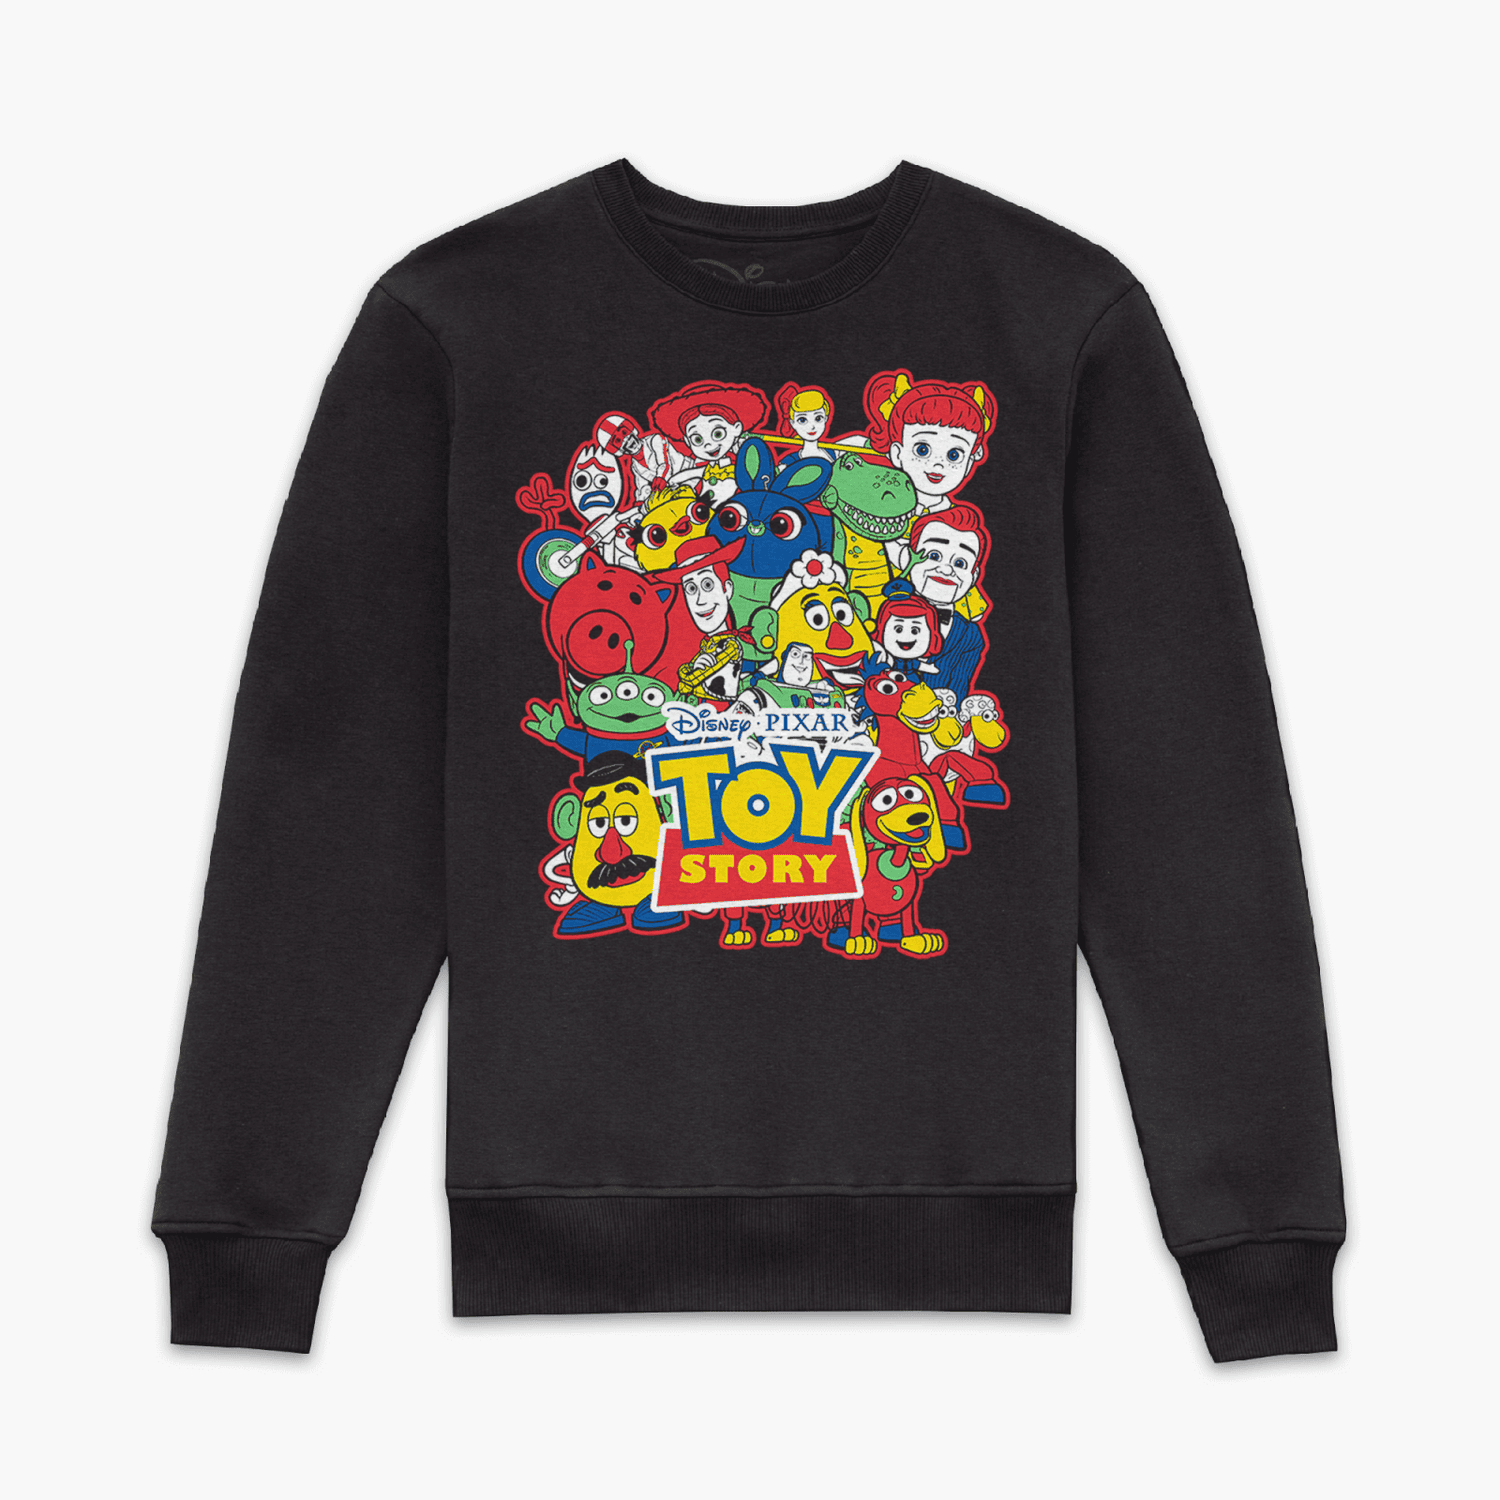 Toy Story Characters Sweatshirt - Black